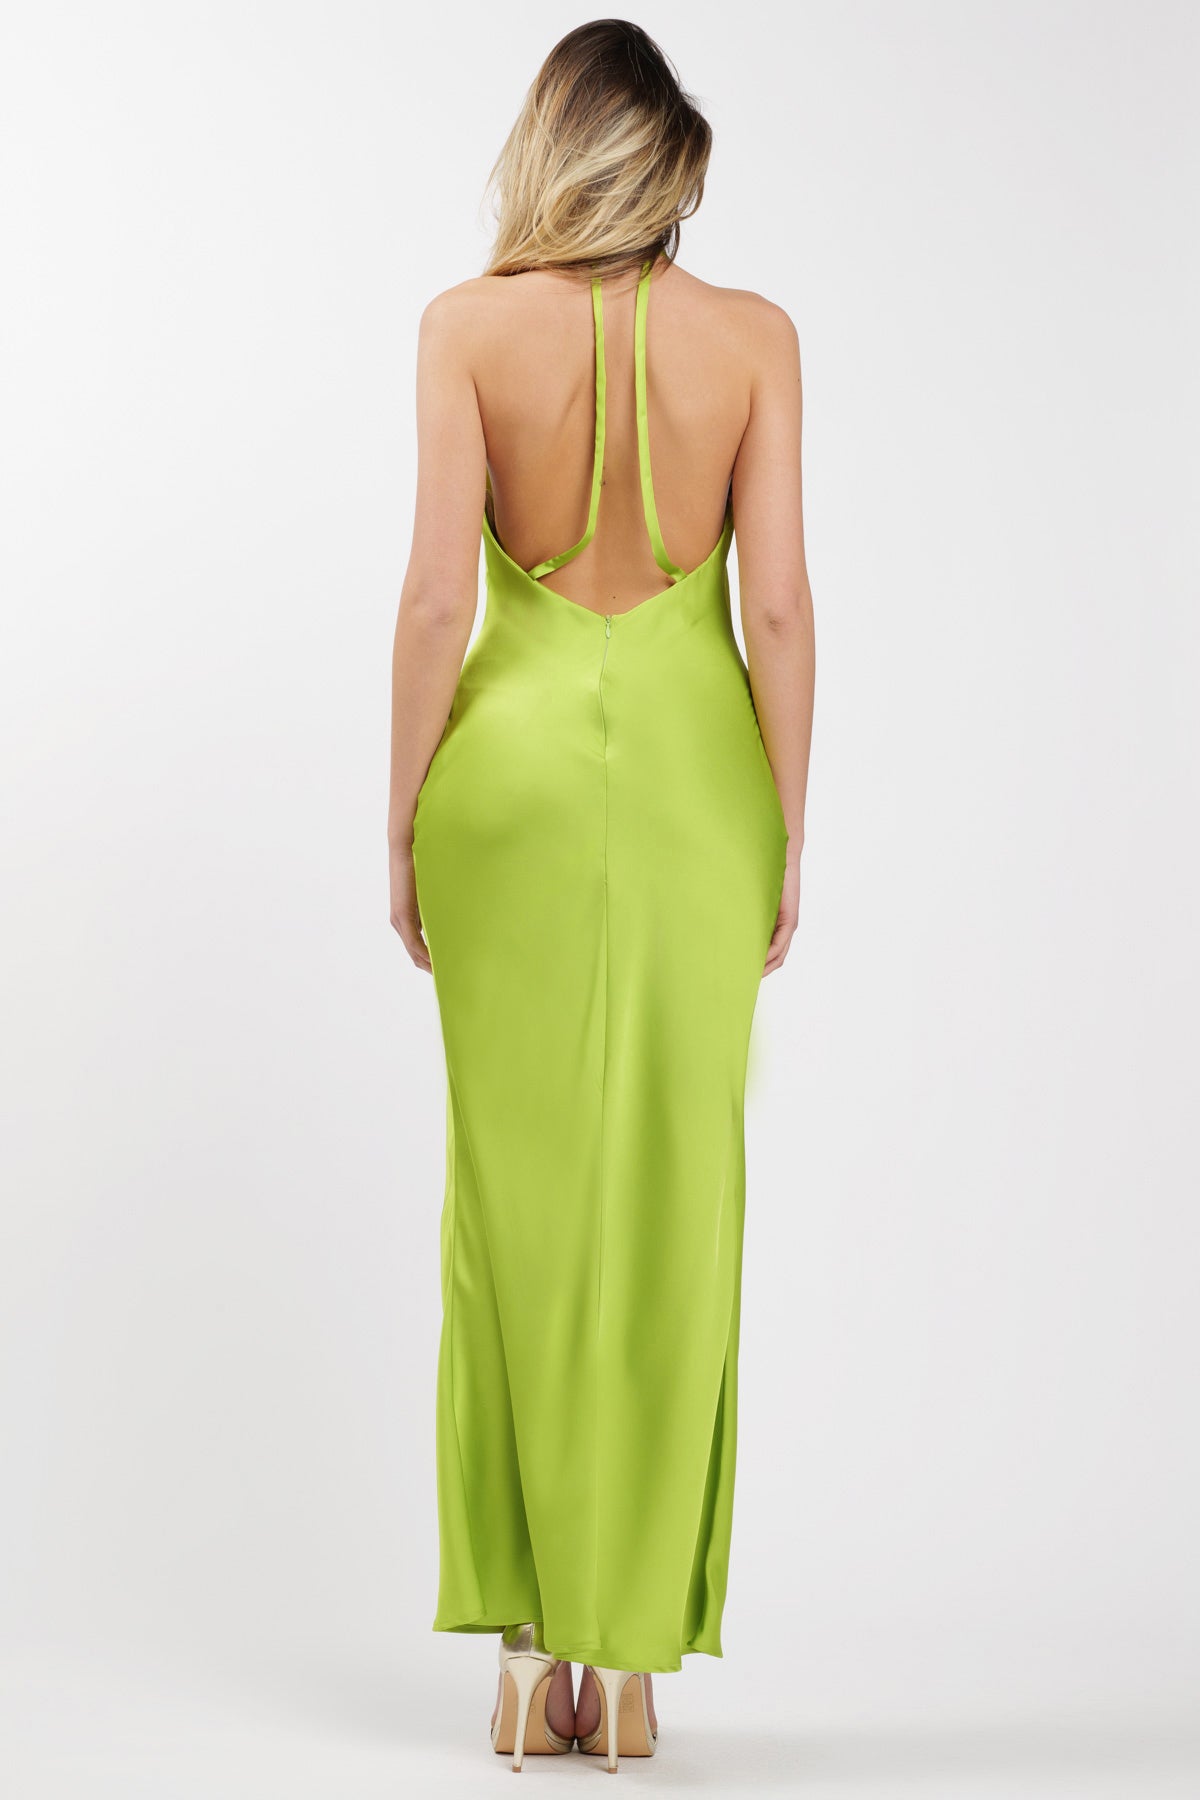 Keira Dress Chartreuse